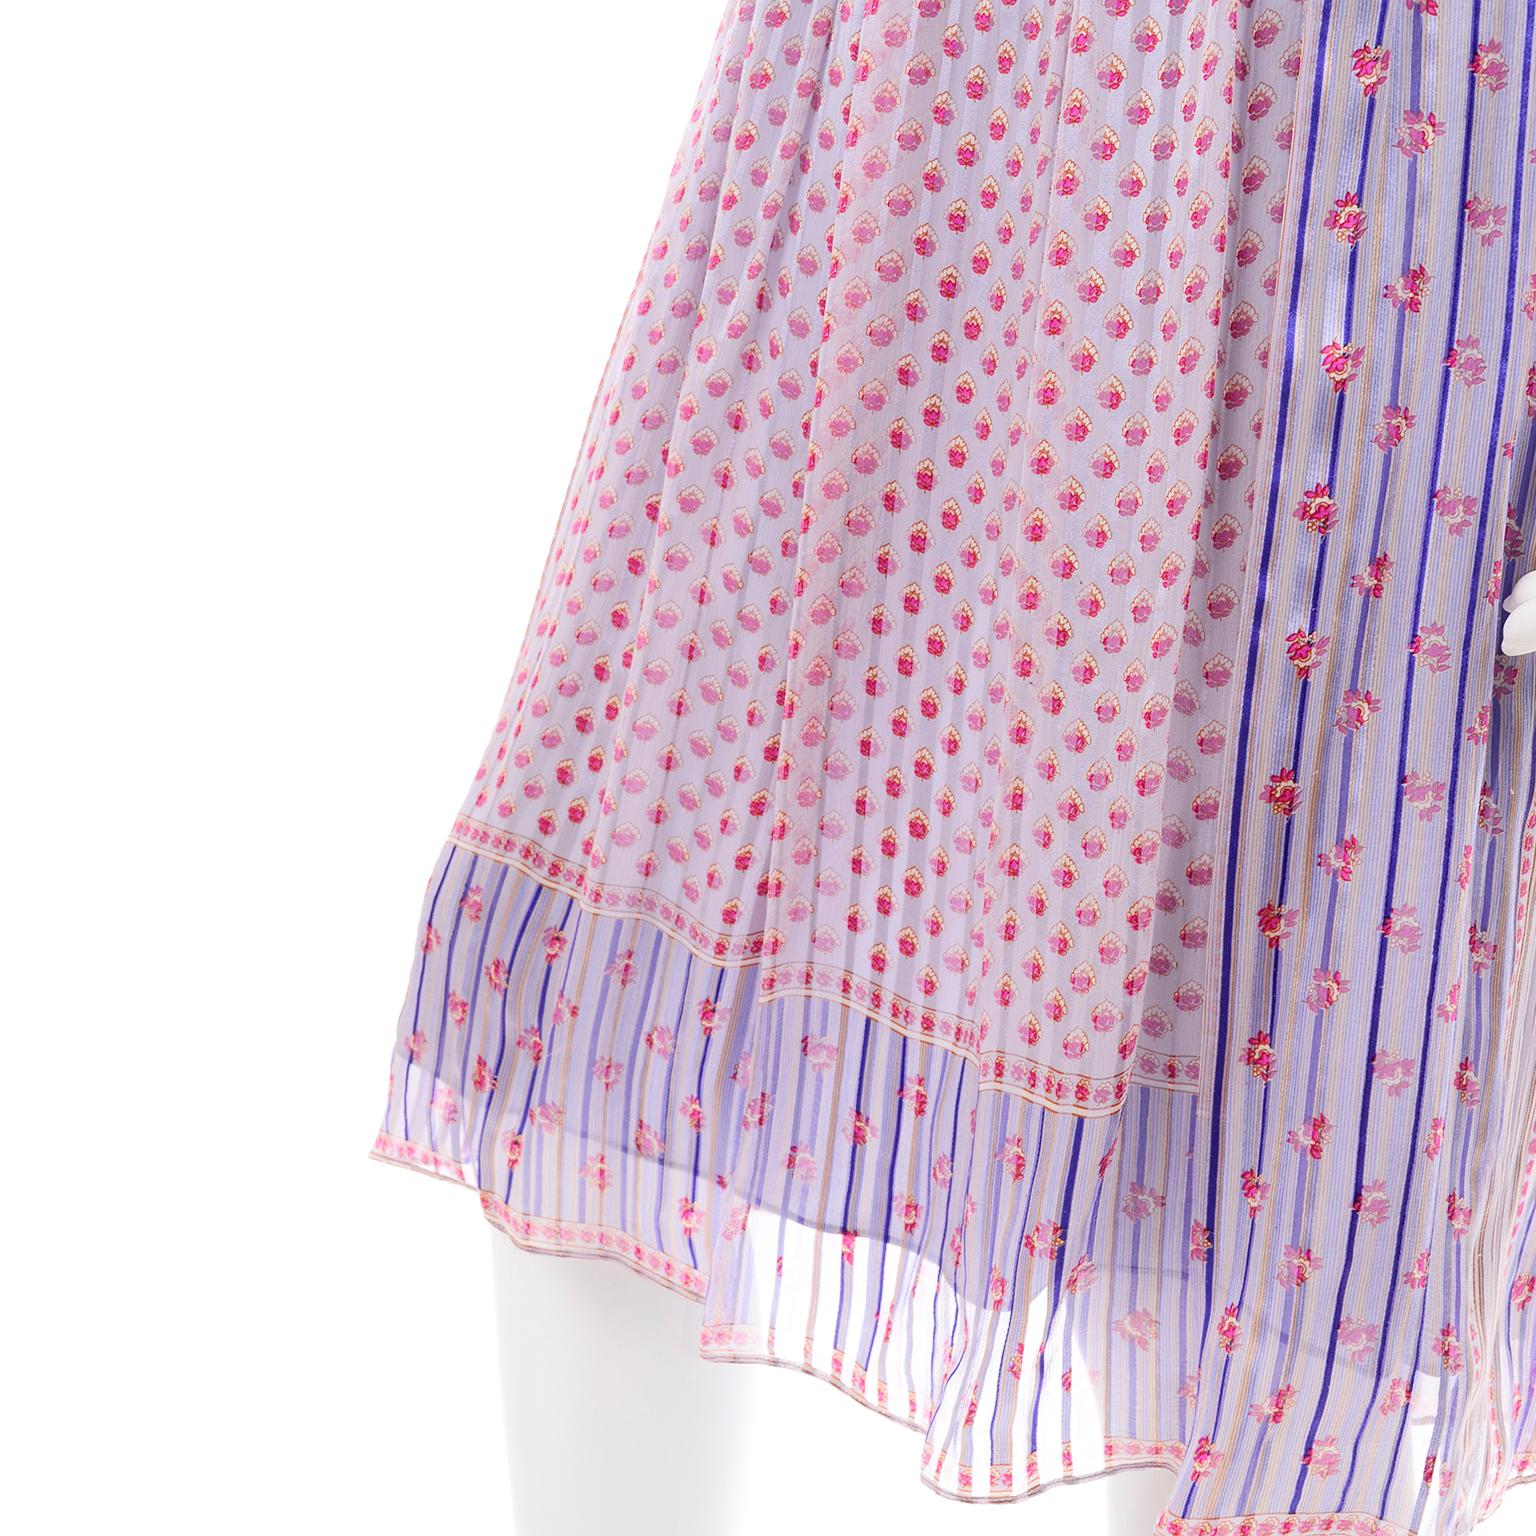 Designer Silk Chiffon 2 Pc Dress in Purple Yellow Pink Floral Print Pattern Mix 10